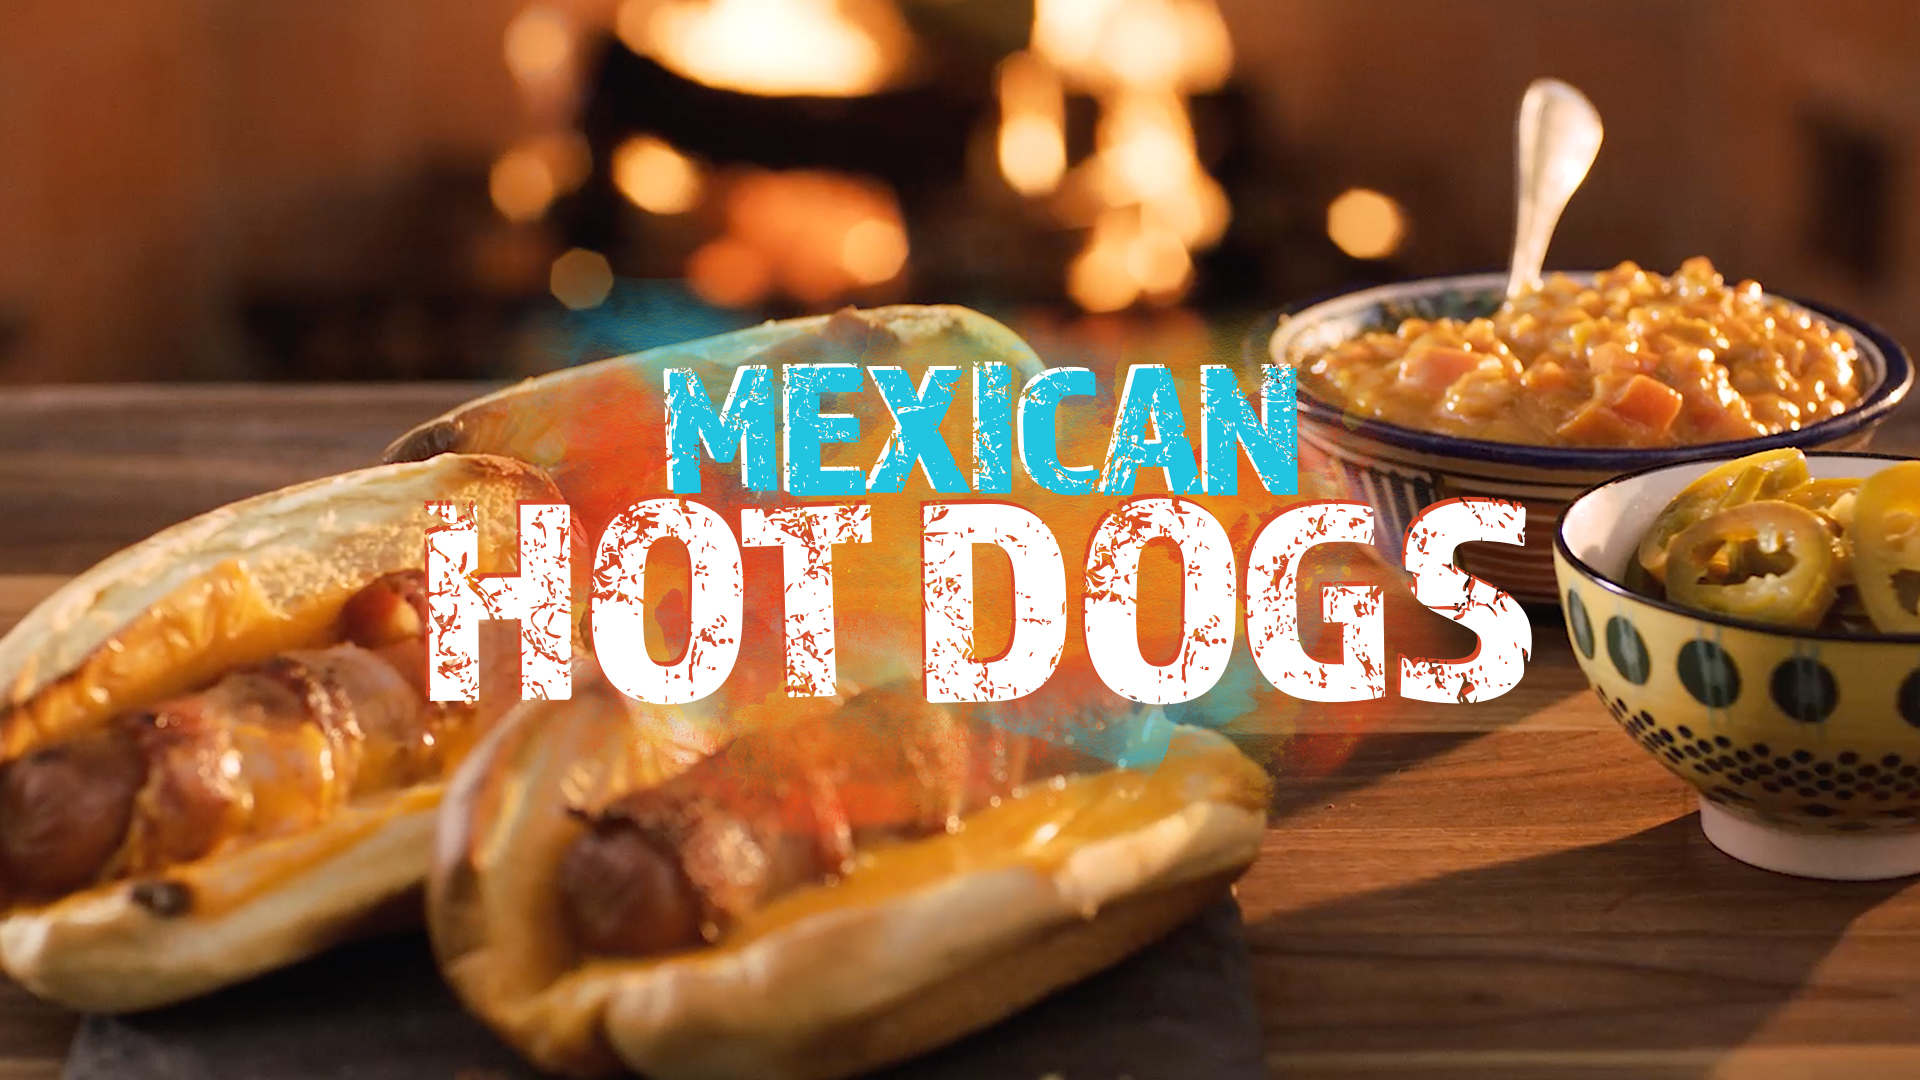 Hot Dogs a la Mexicana